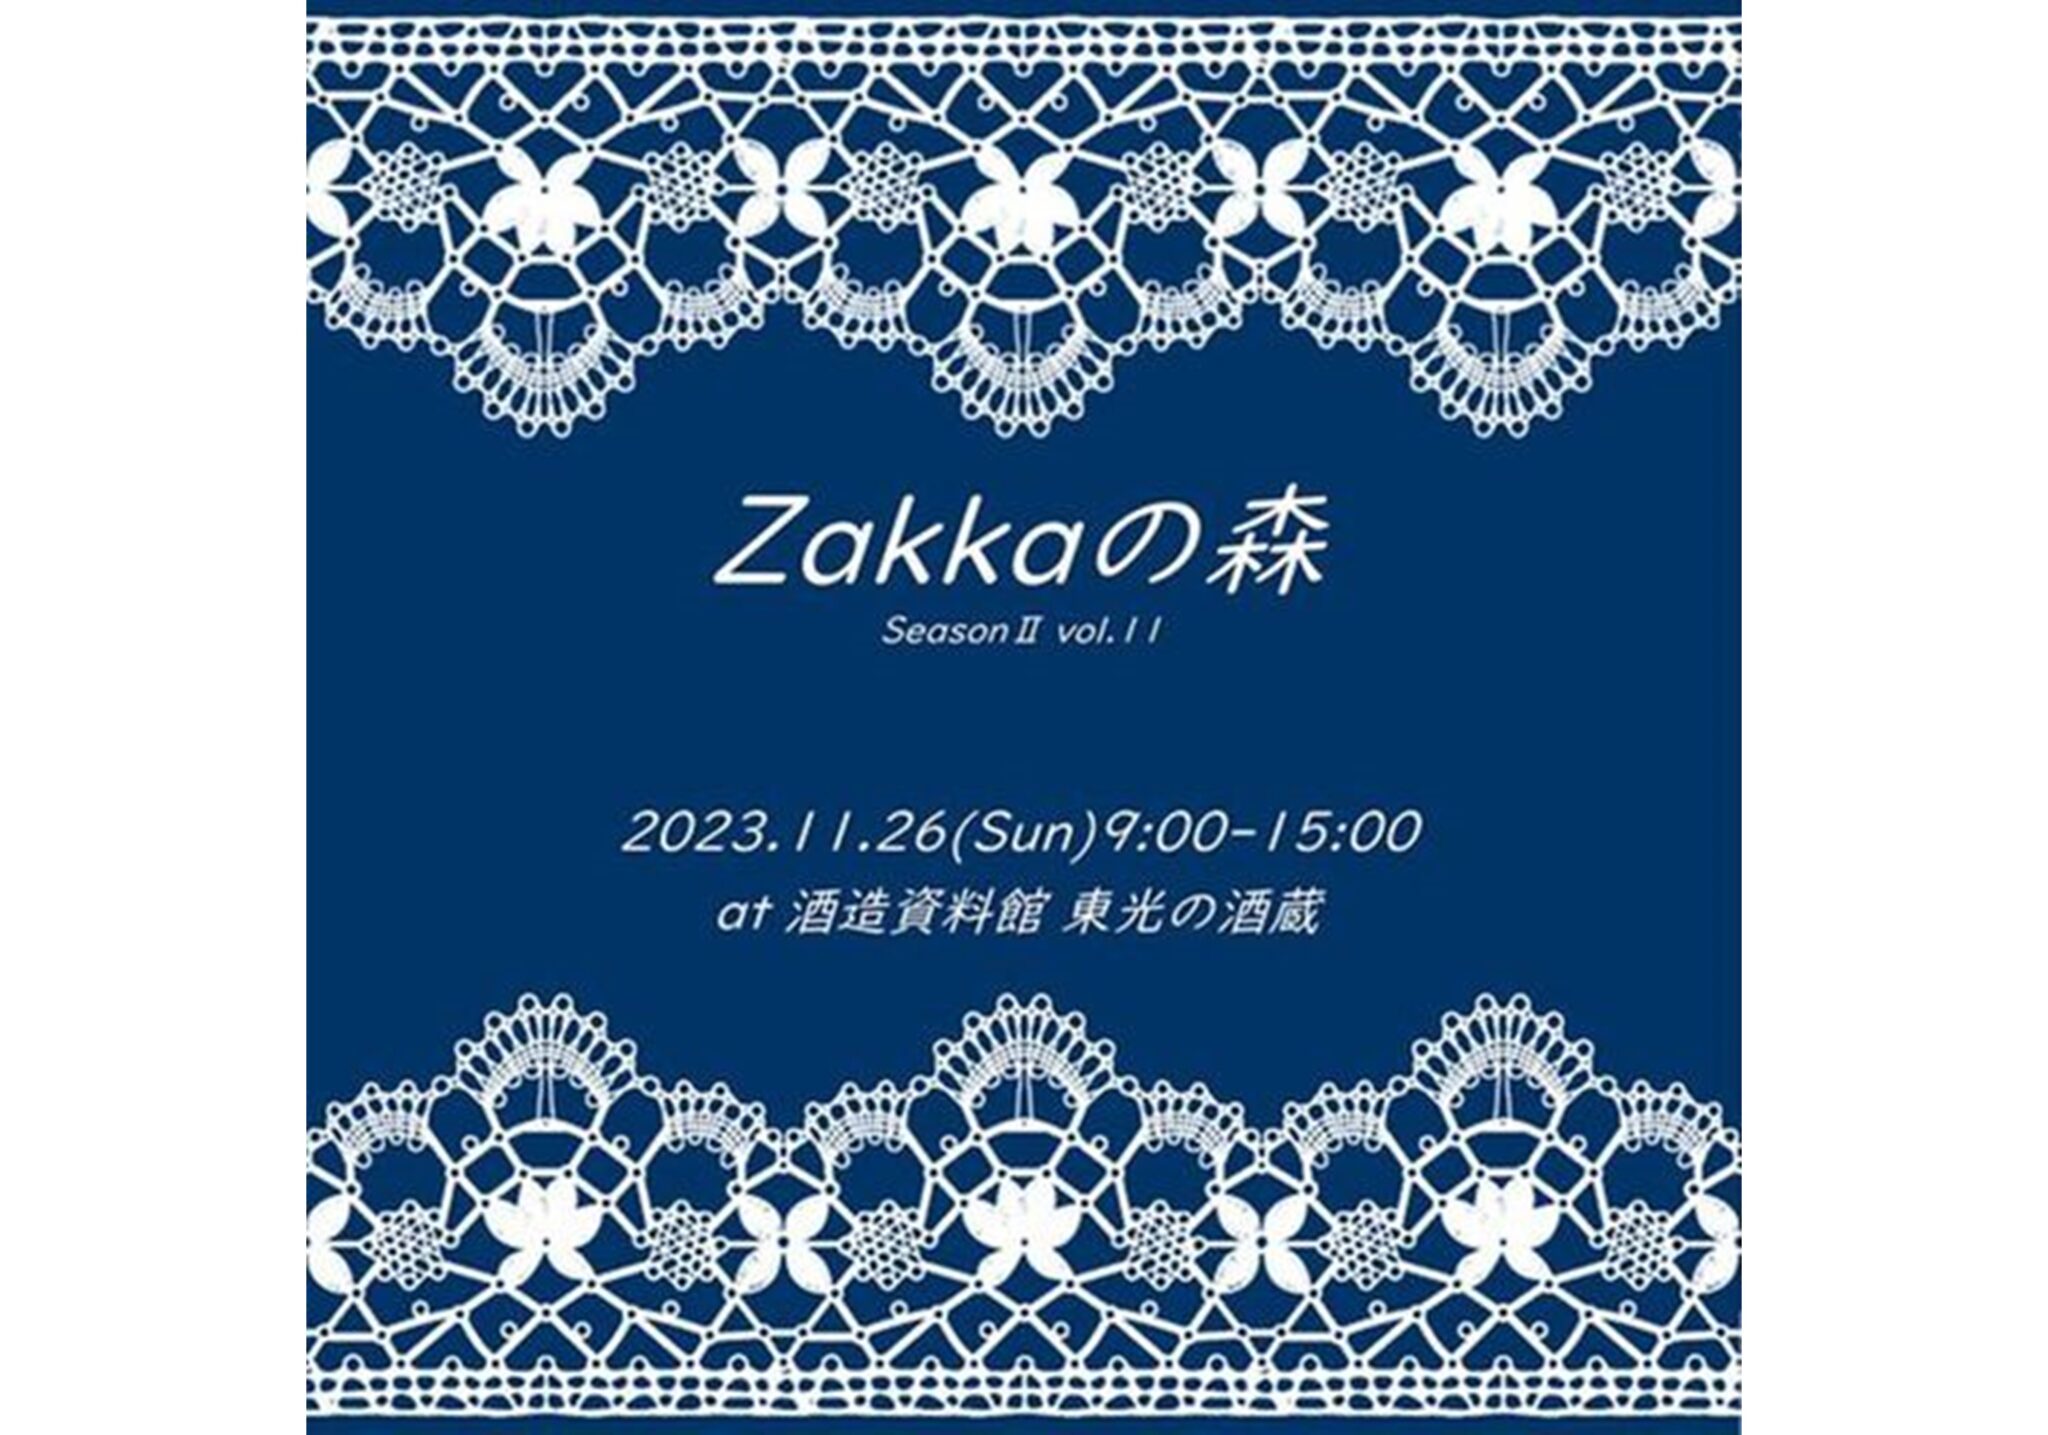 Zakka Forest SeasonⅡ vol.11